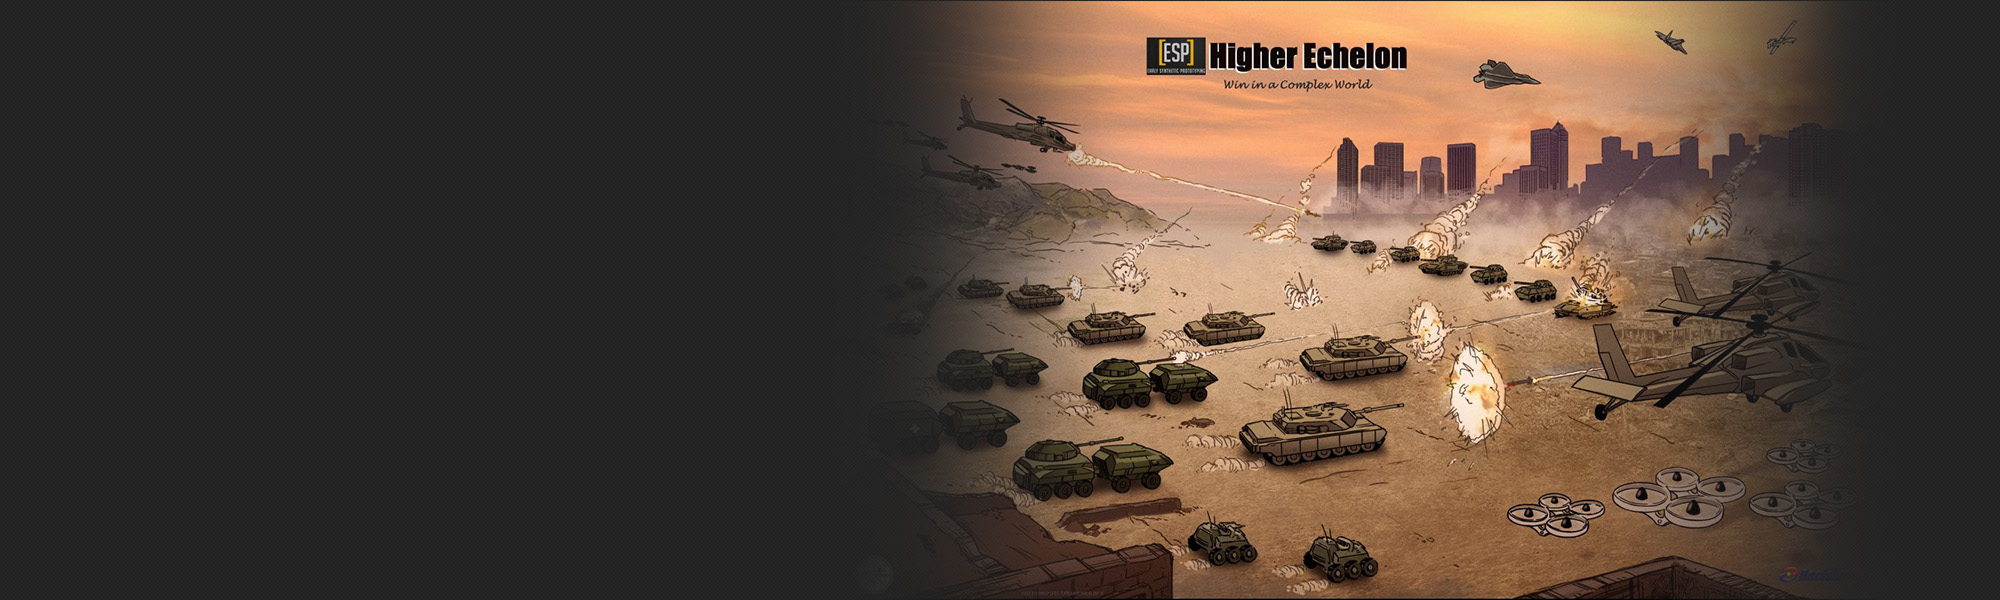 ESP Higher Echelon military game